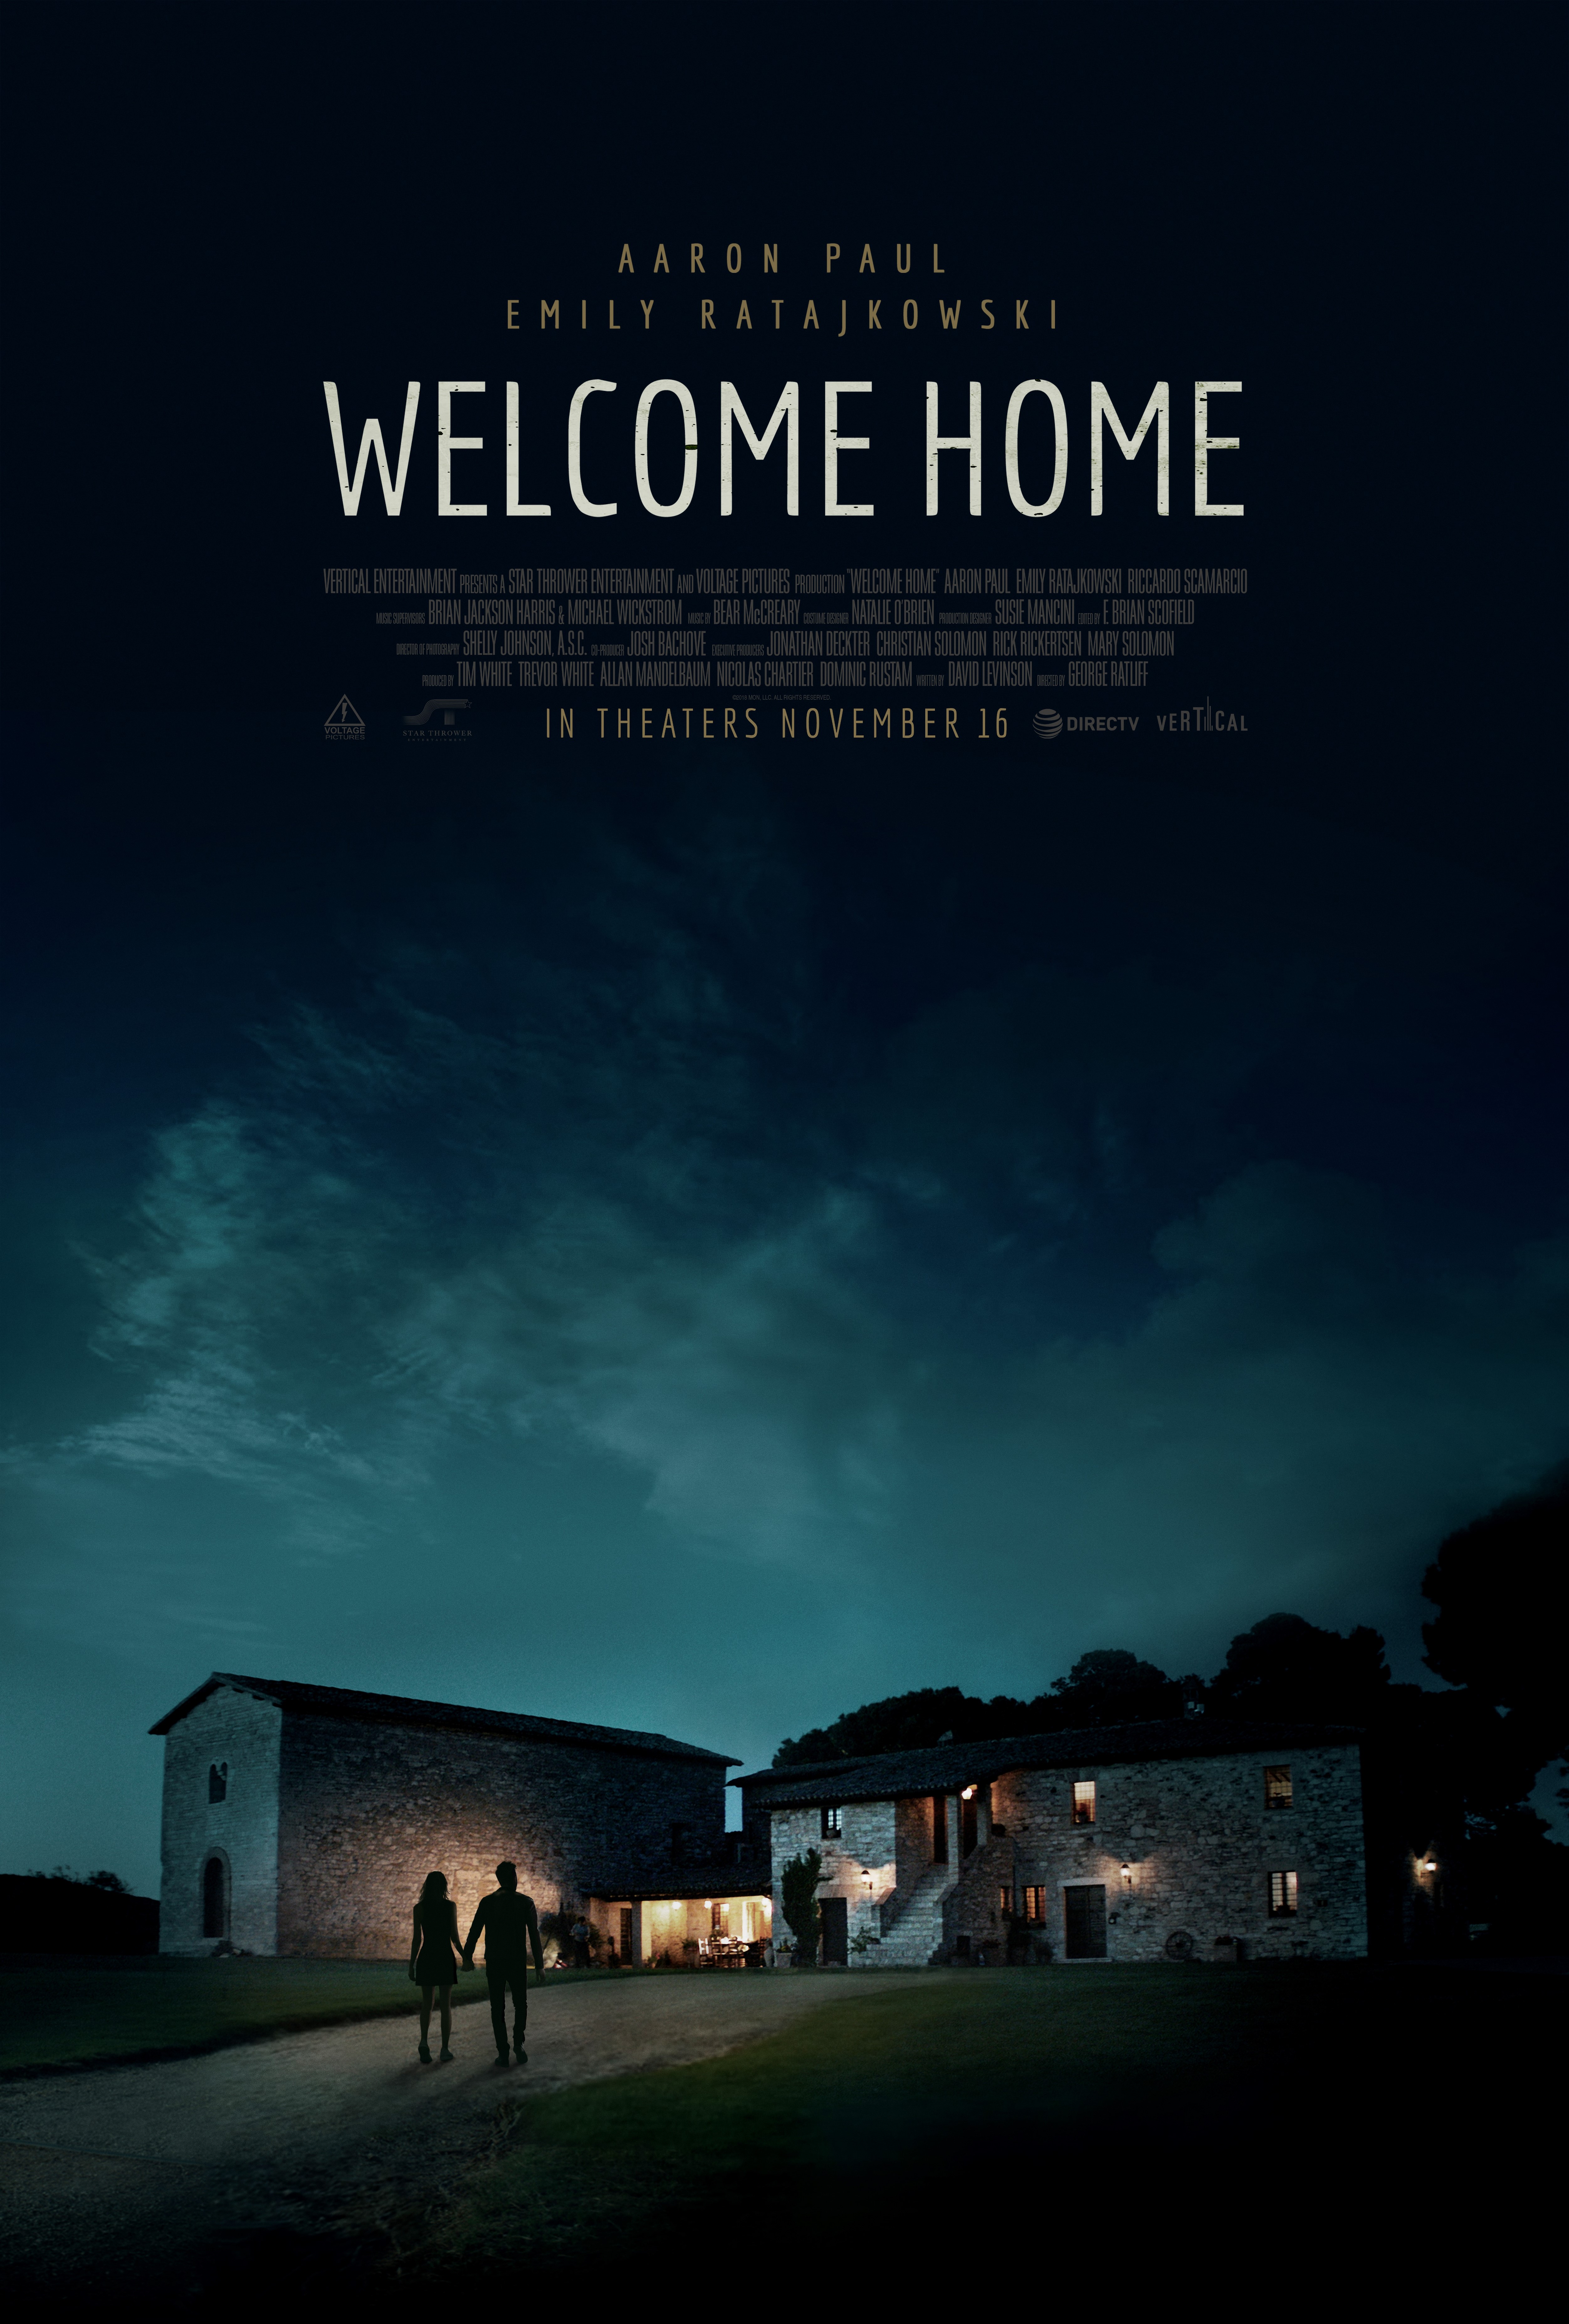 Nonton film Welcome Home layarkaca21 indoxx1 ganool online streaming terbaru